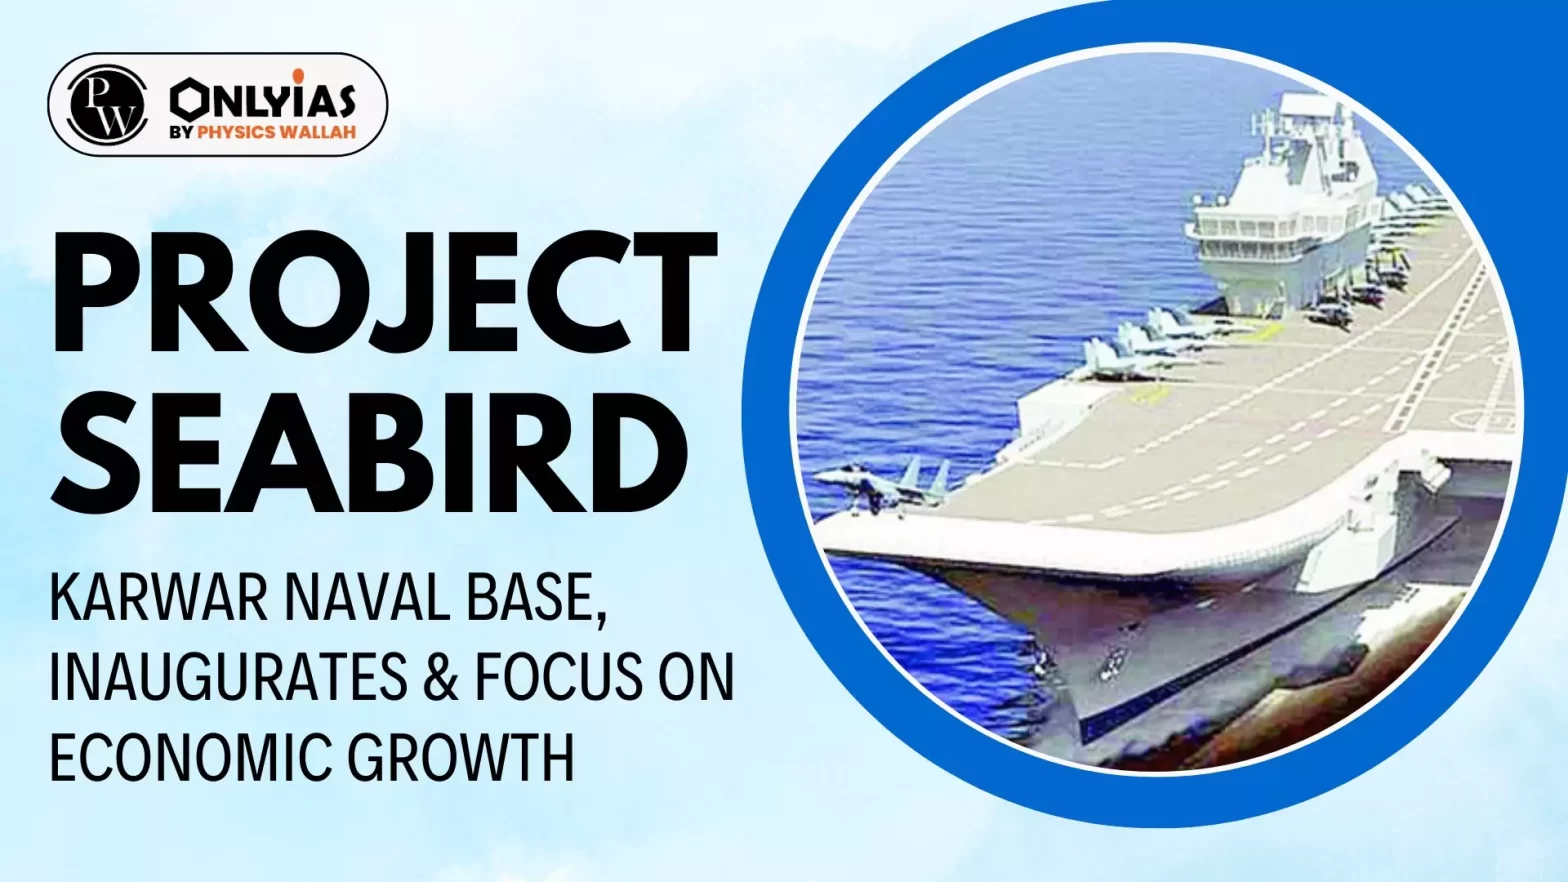 Project Seabird: Karwar Naval Base, Inaugurates & Focus on Economic Growth